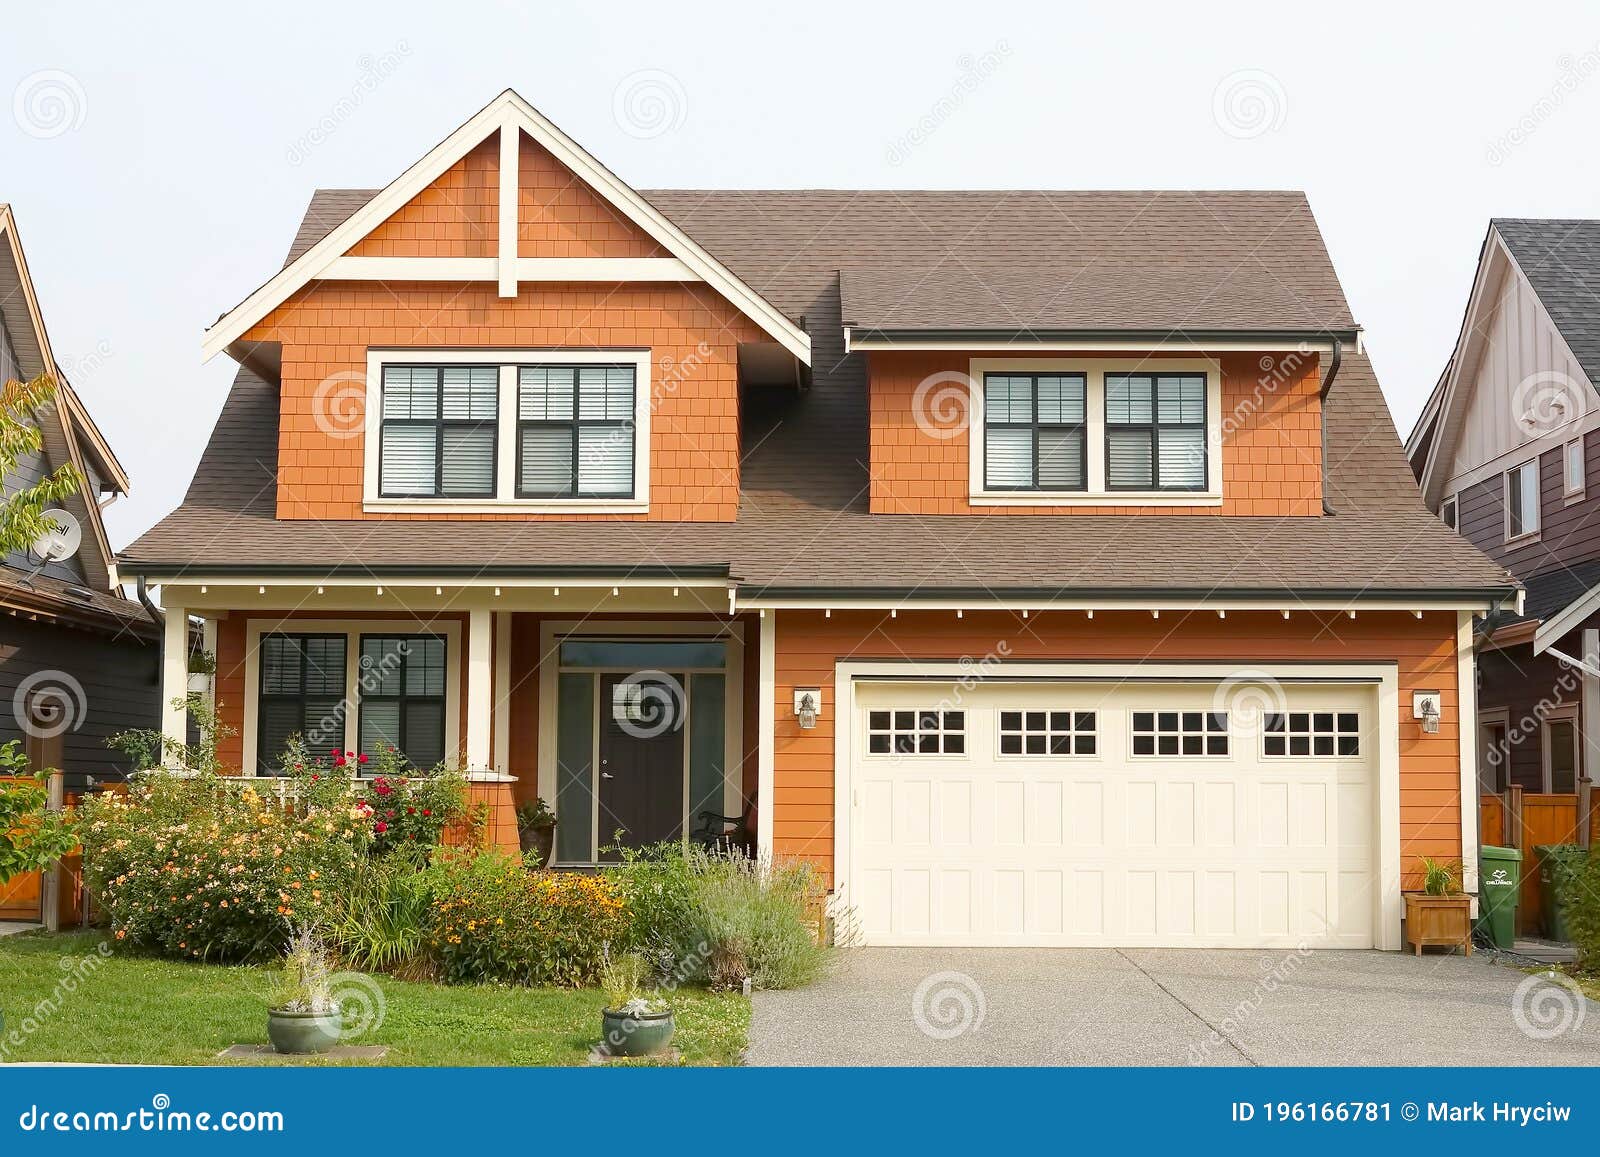 house home orange exterior front elevation roof details